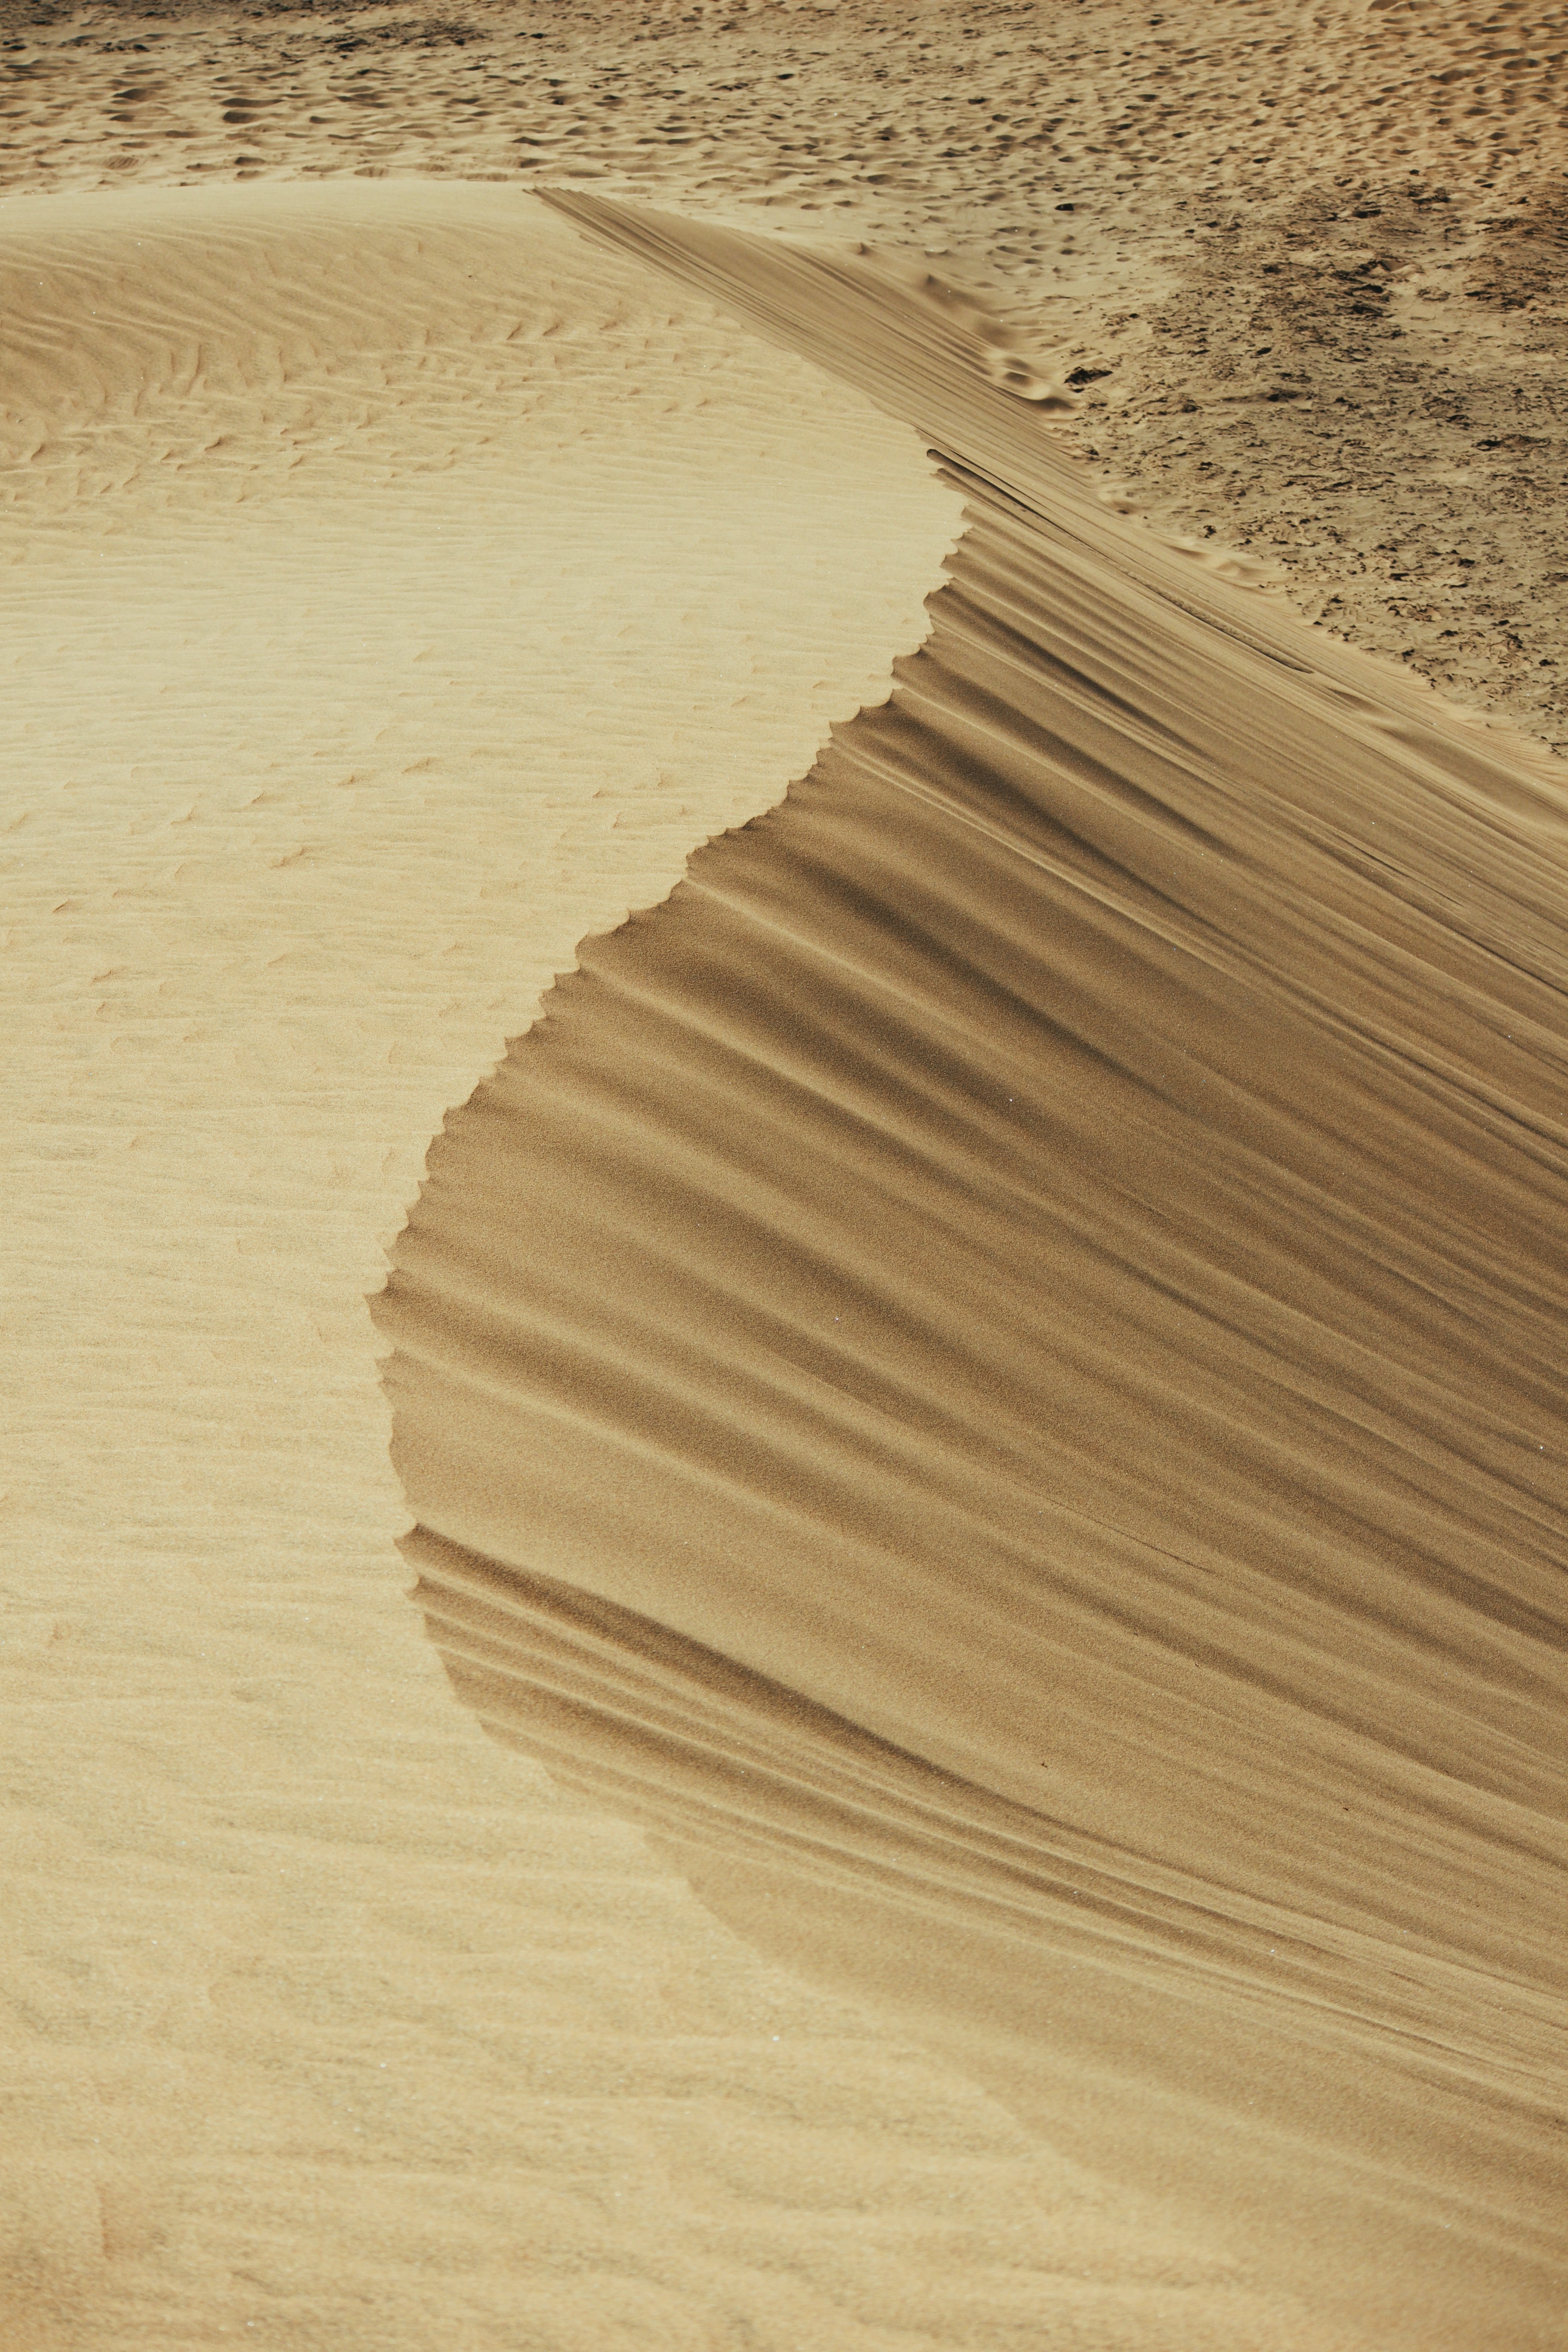 152153 descargar imagen naturaleza, arena, desierto, polvo, dunas: fondos de pantalla y protectores de pantalla gratis